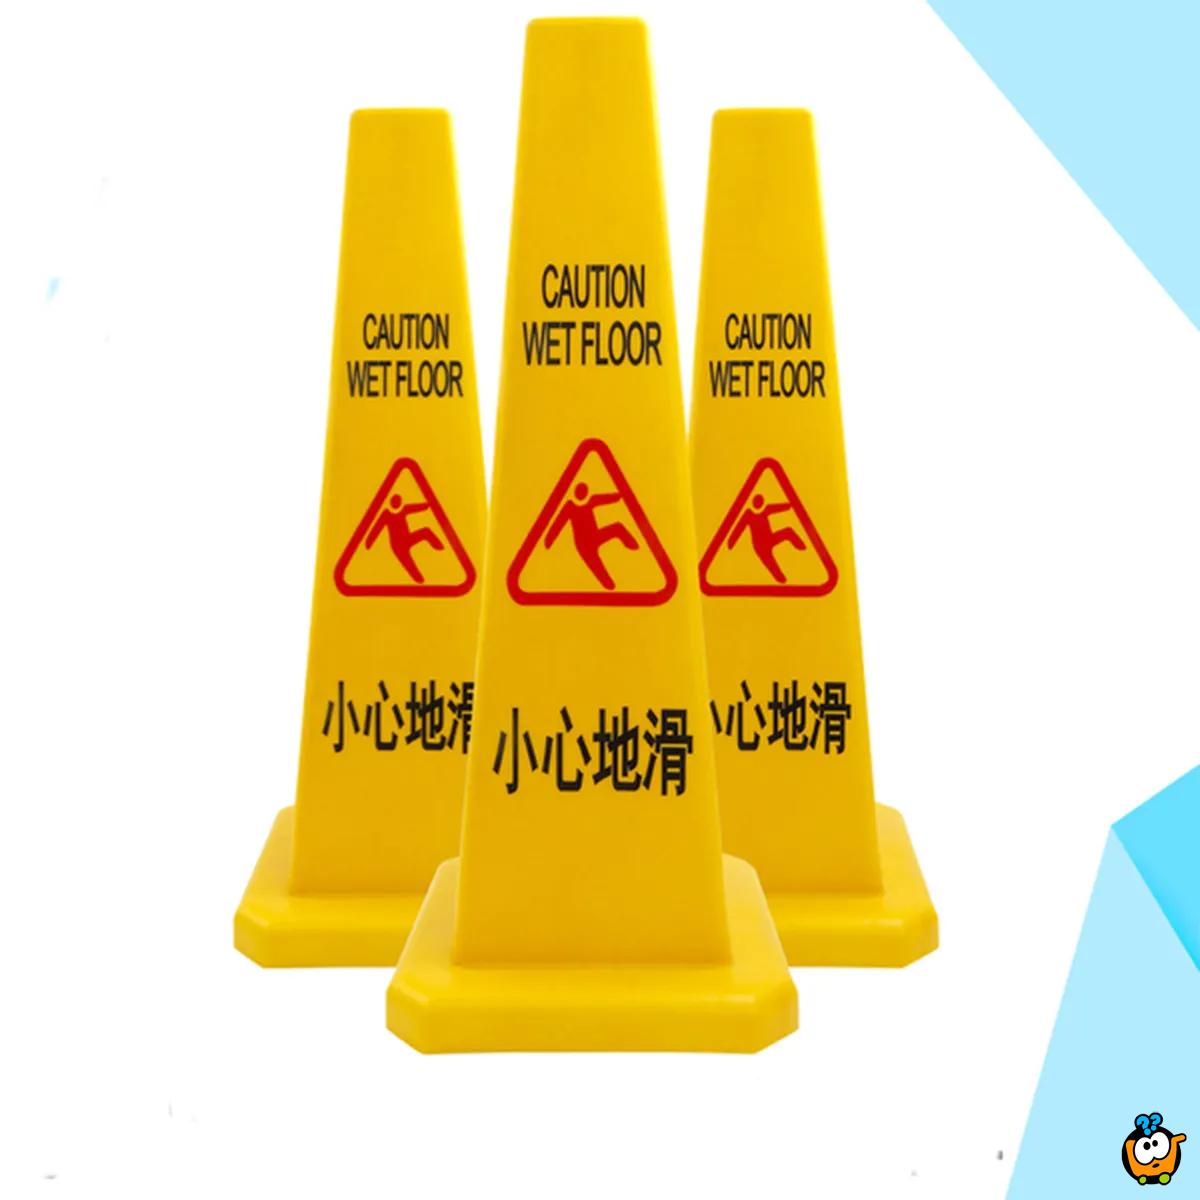 WET FLOOR - Žuti stubić upozorenja za klizav pod